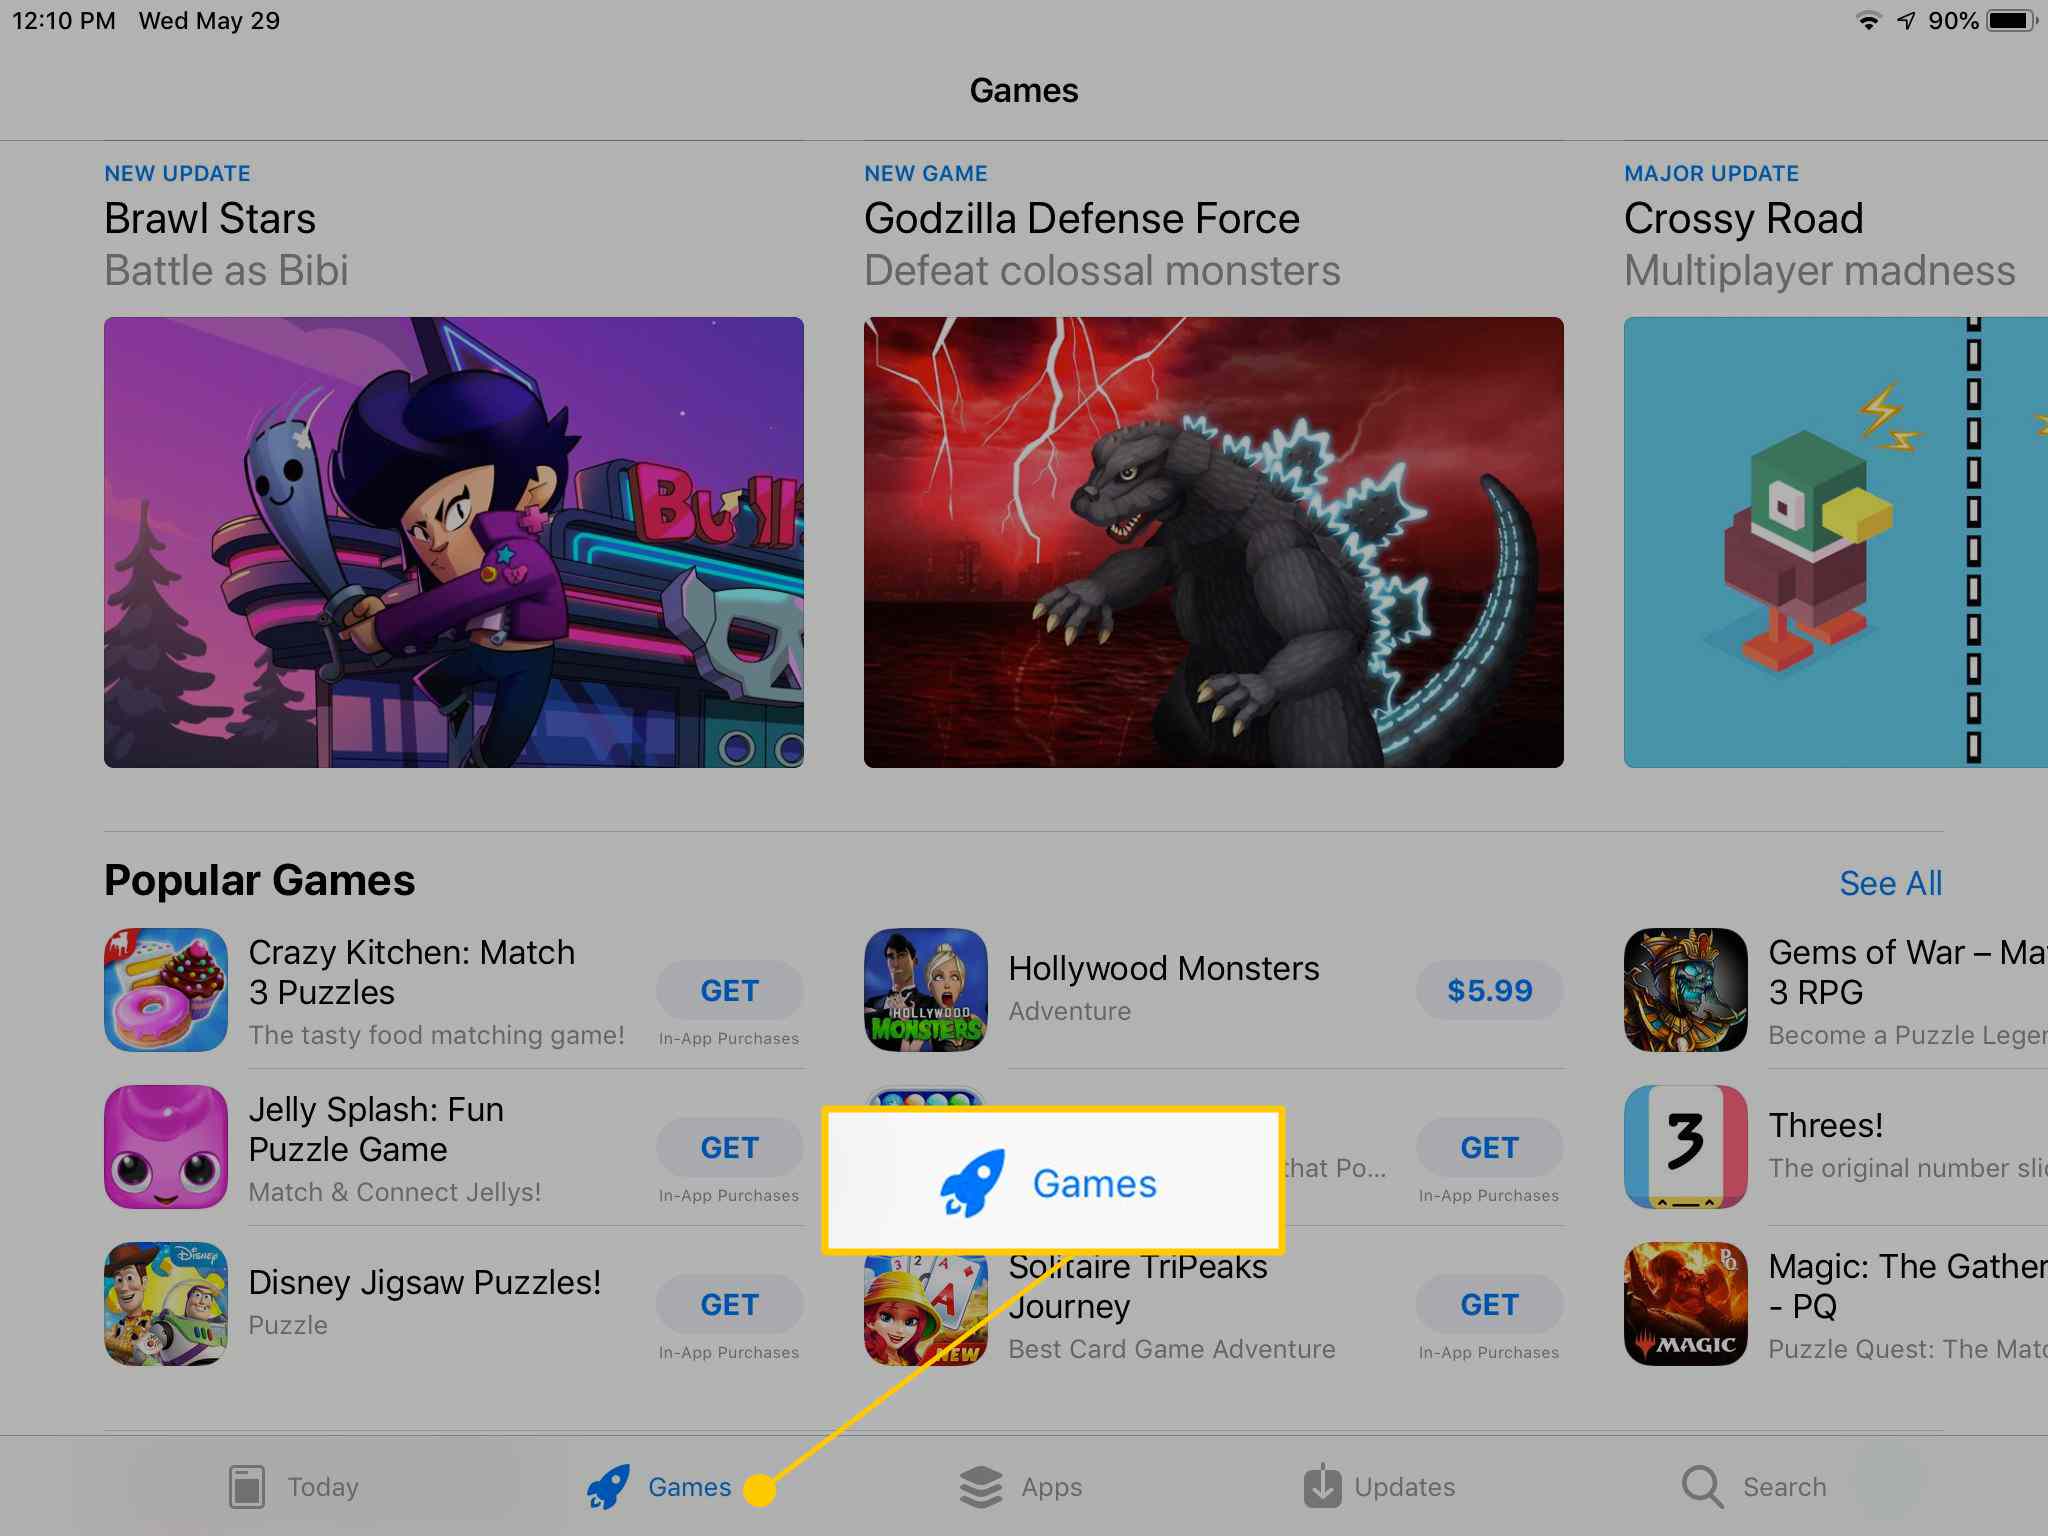 Tabblad Games in App Store op iPad